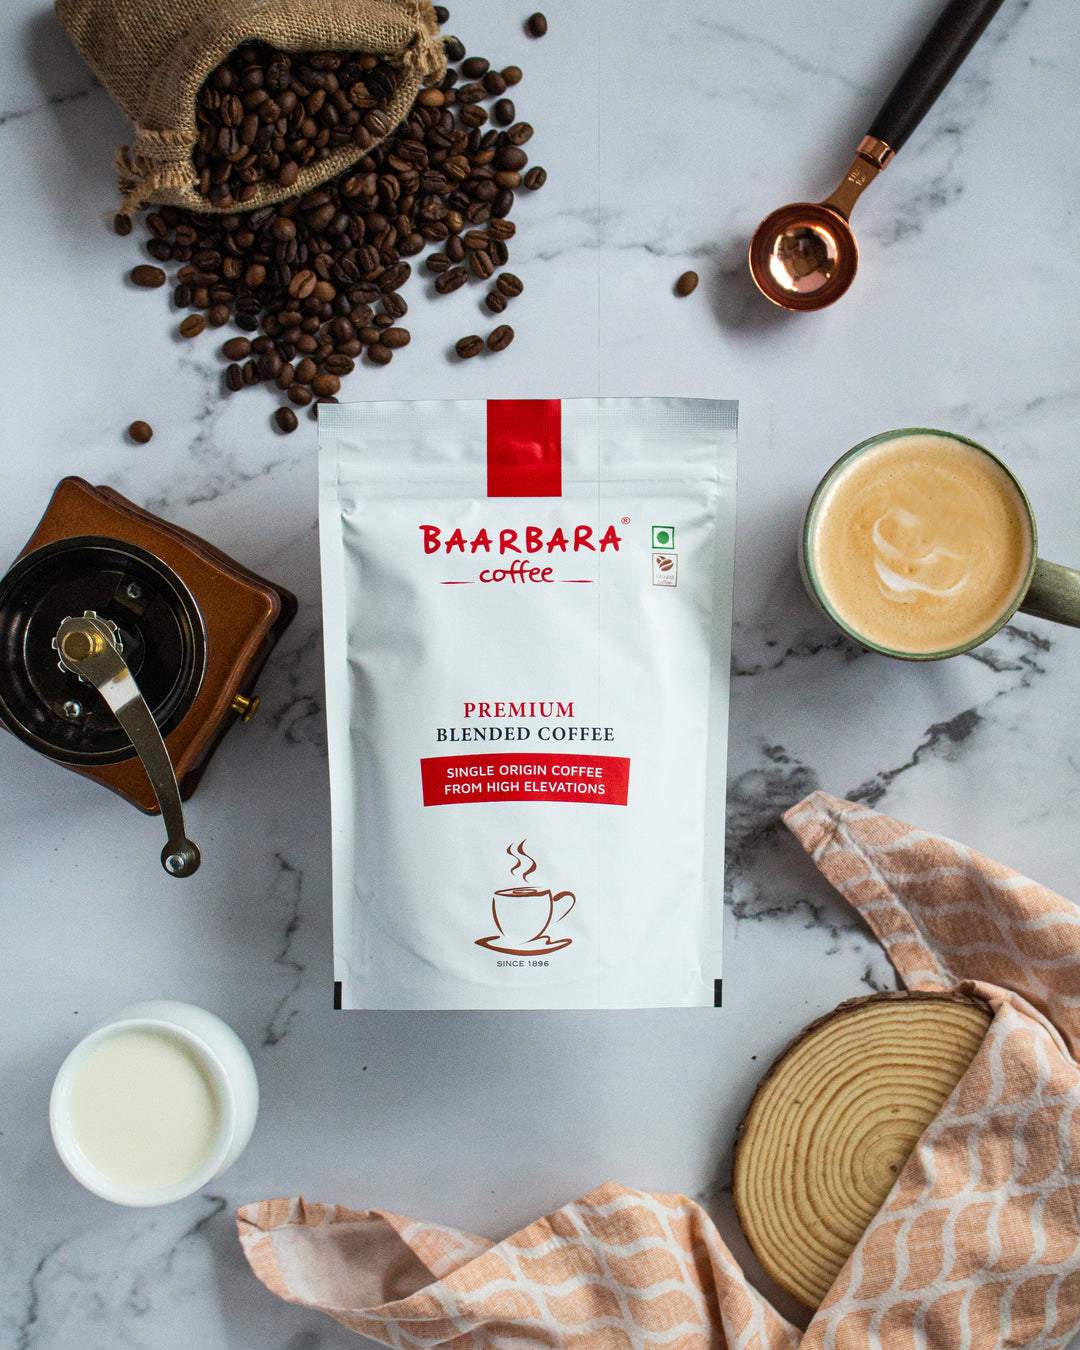 Baarbara Coffee Premium Blended Filter Coffee Powder + Giri's Legacy Premium Filter Coffee Powder - The Ultimate Filter Coffee Duo